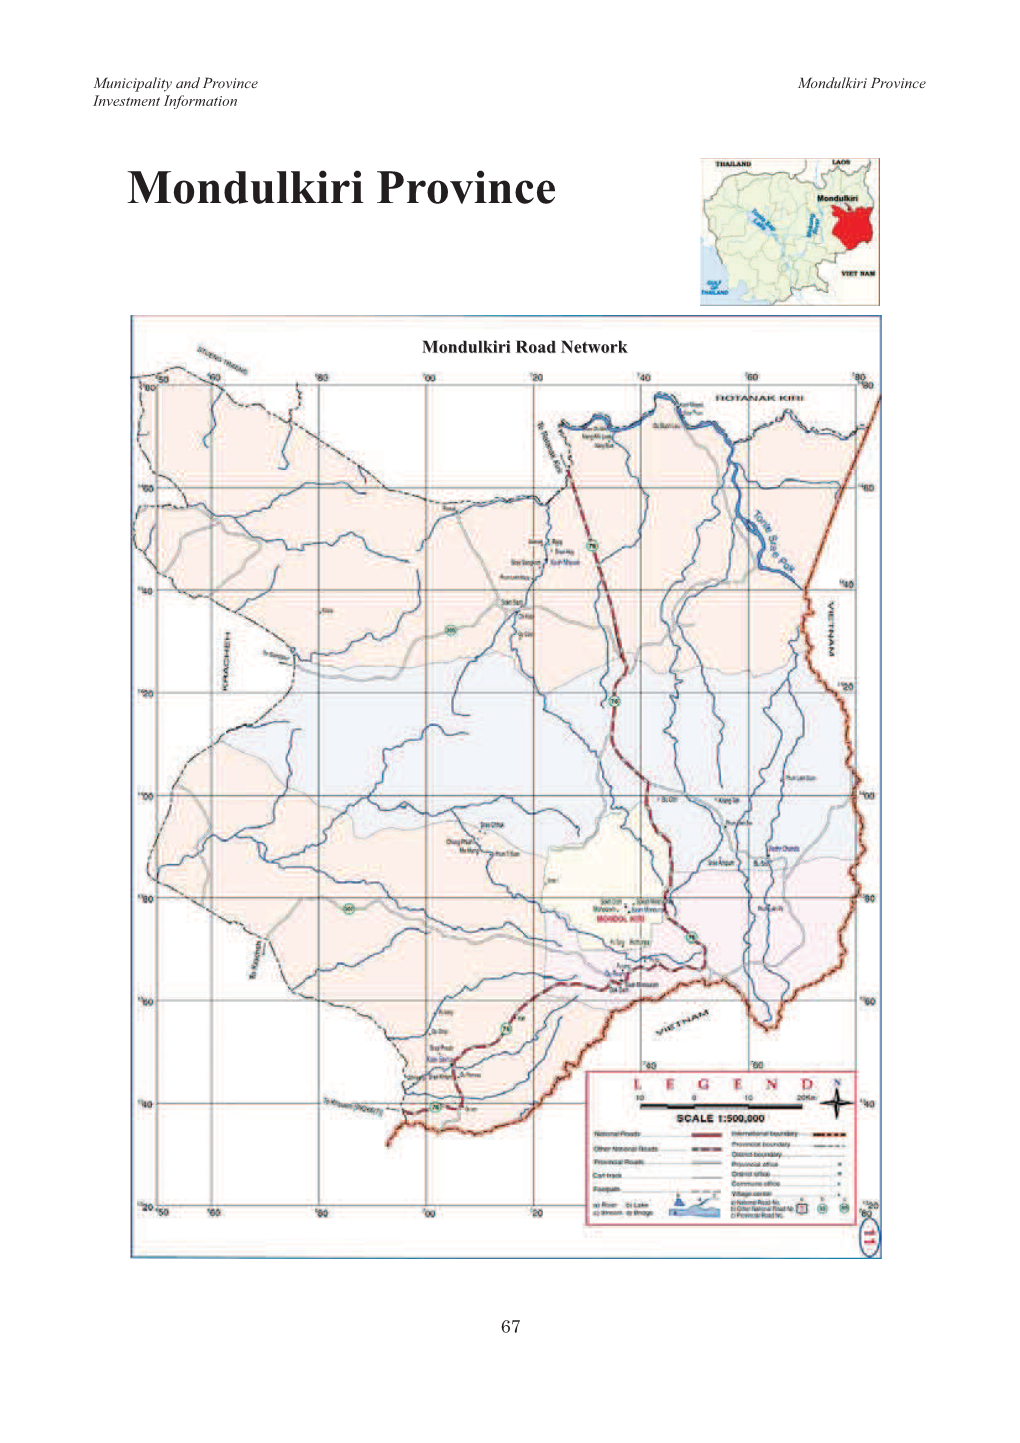 Mondulkiri Province Investment Information